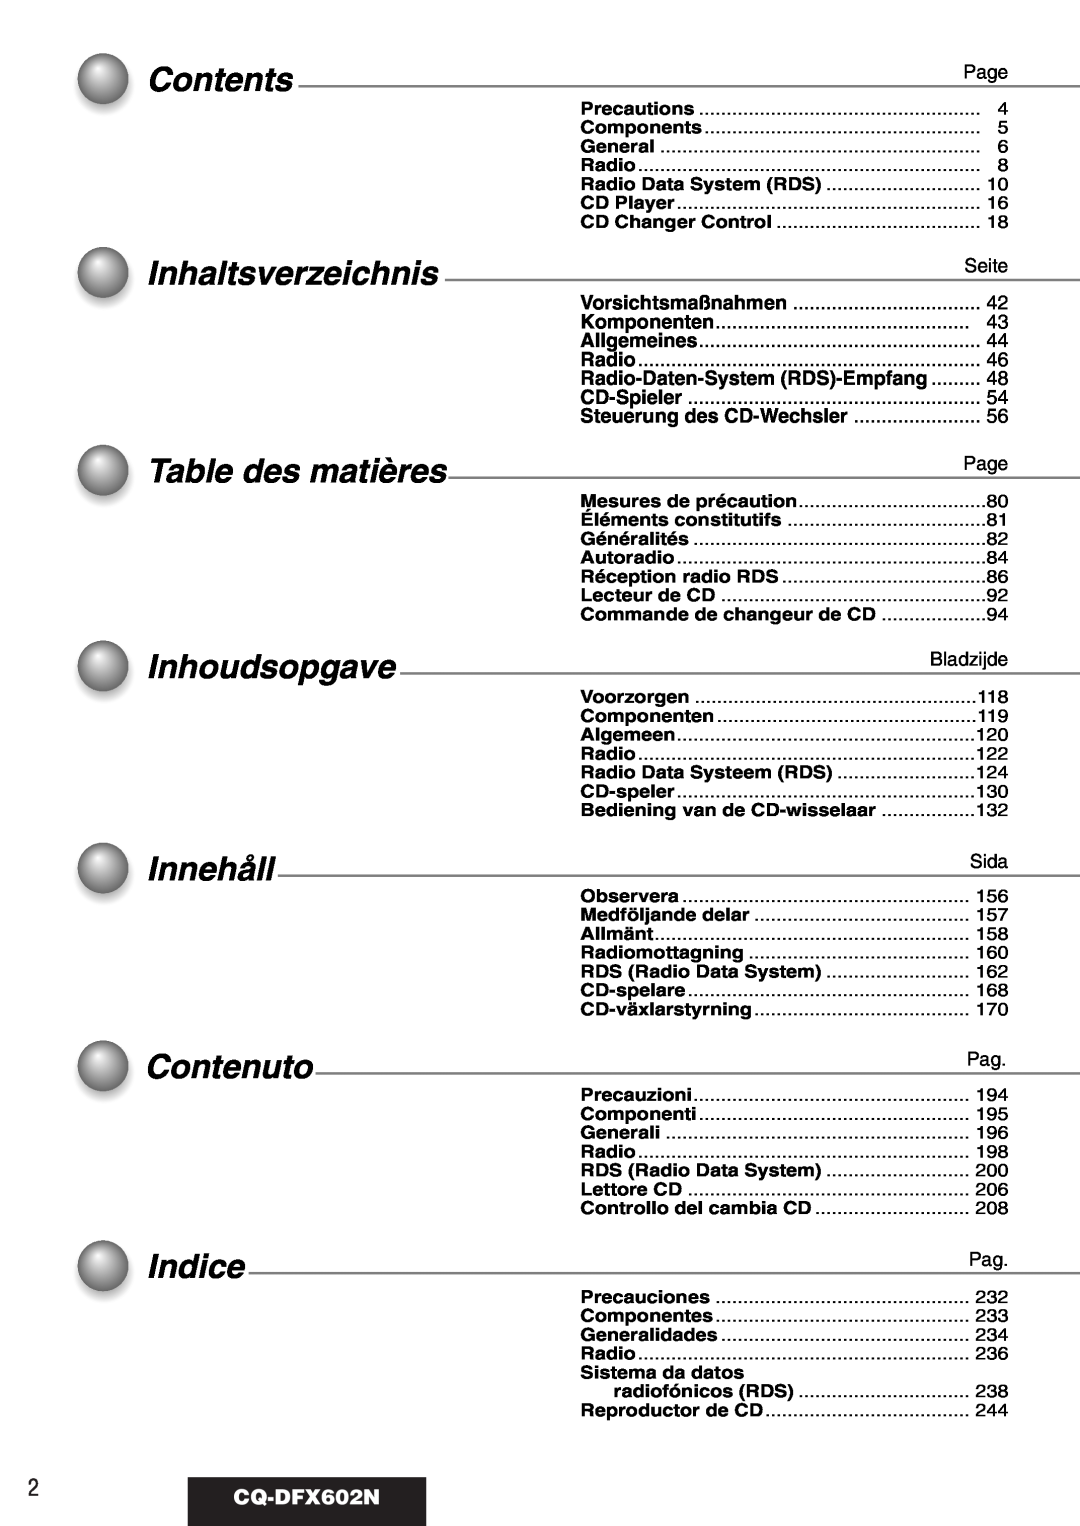 Panasonic manual 2CQ-DFX602N, Contents, Inhaltsverzeichnis, Table des matières, Inhoudsopgave, Innehåll Contenuto Indice 